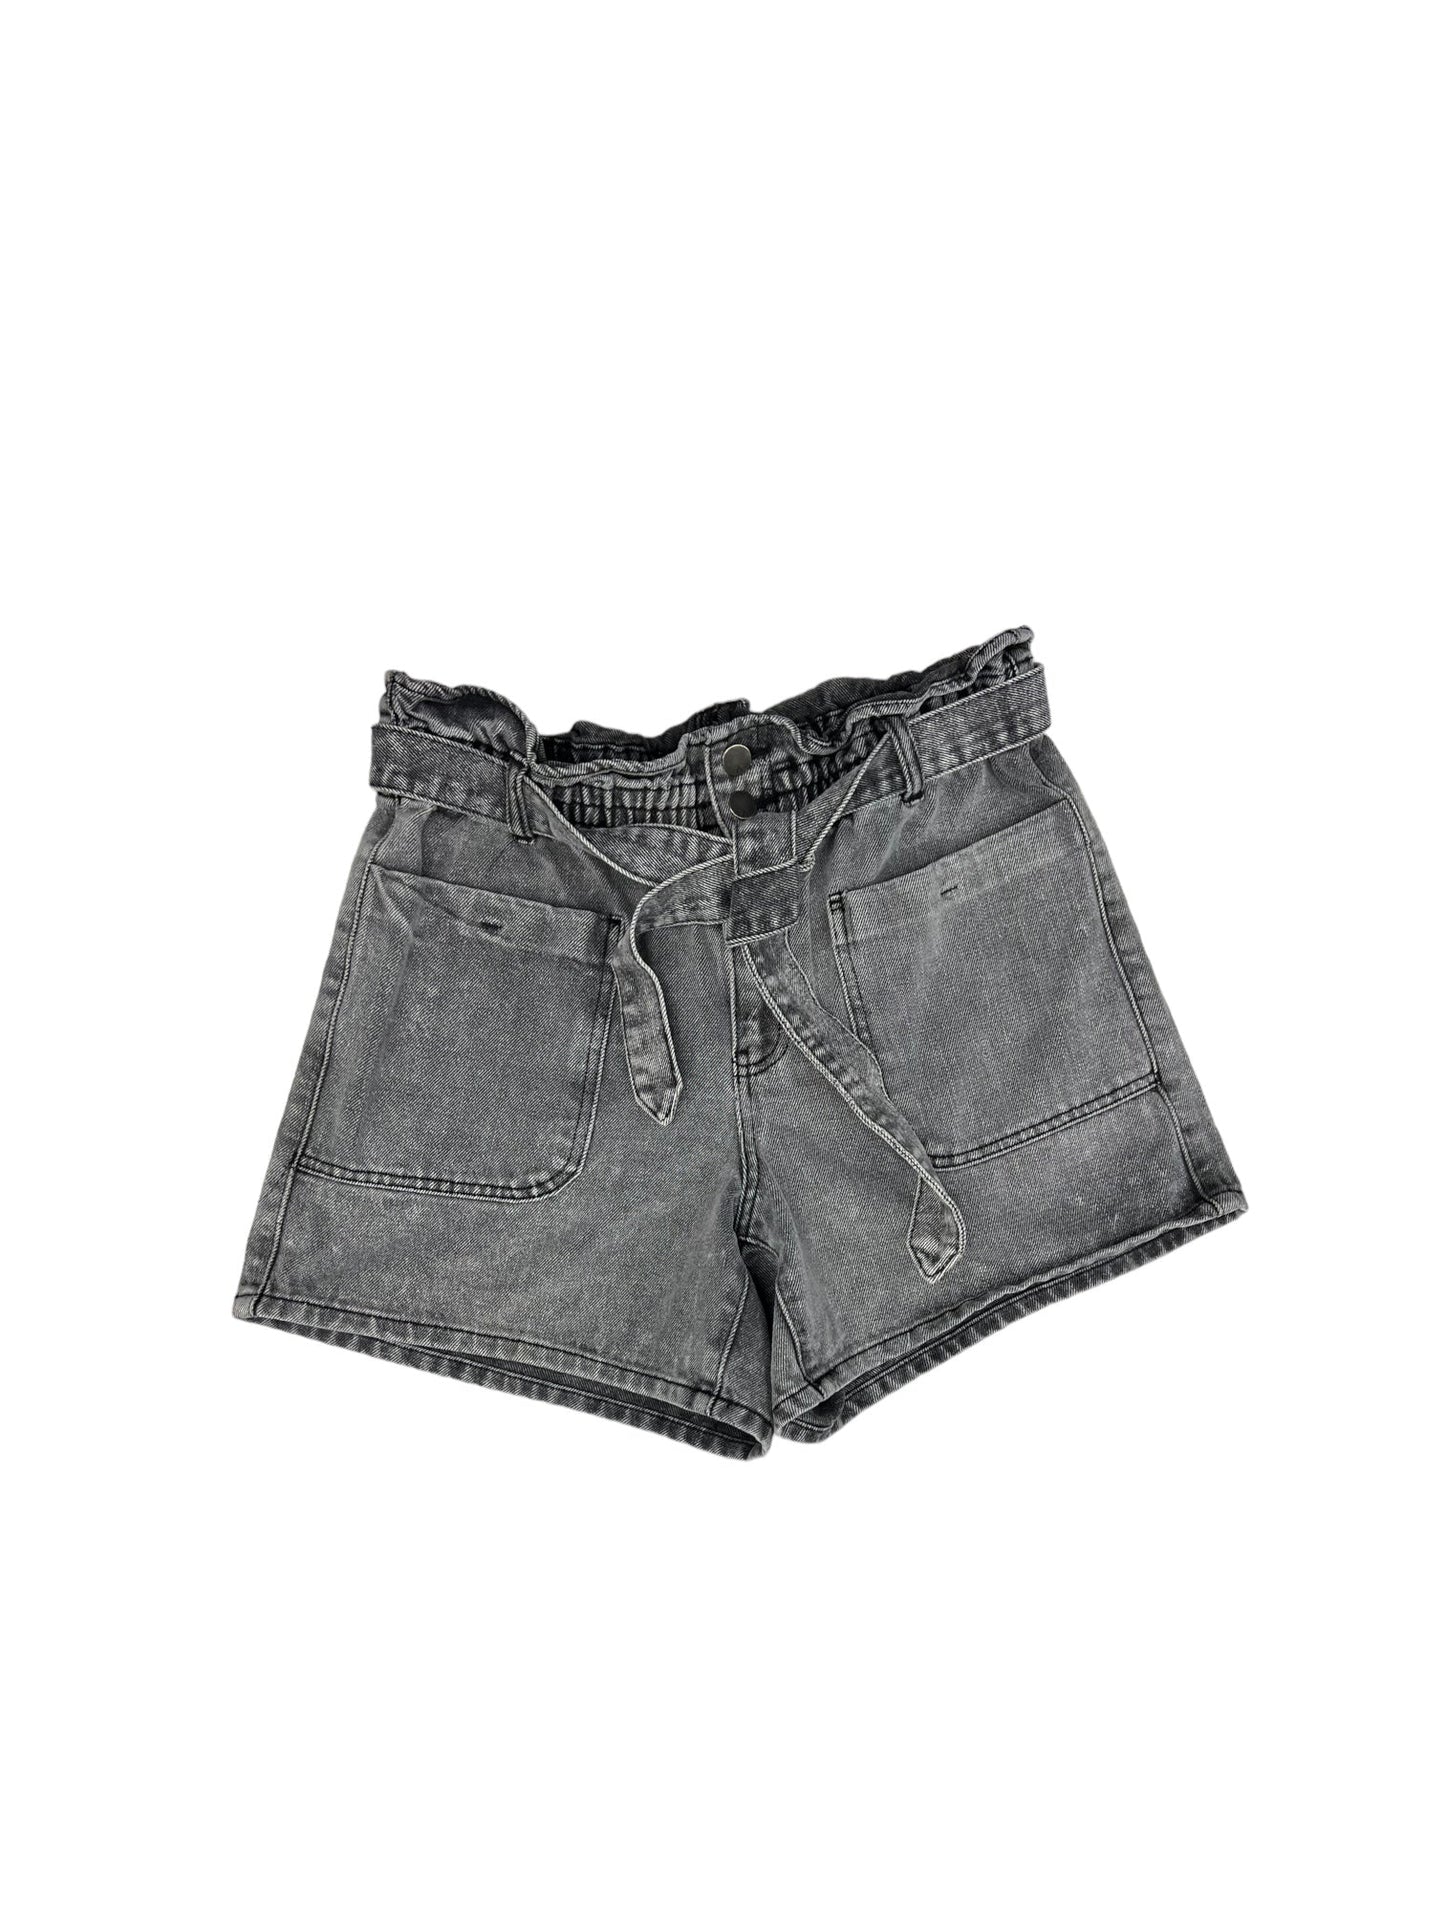 Black Denim Shorts Clothes Mentor, Size 28